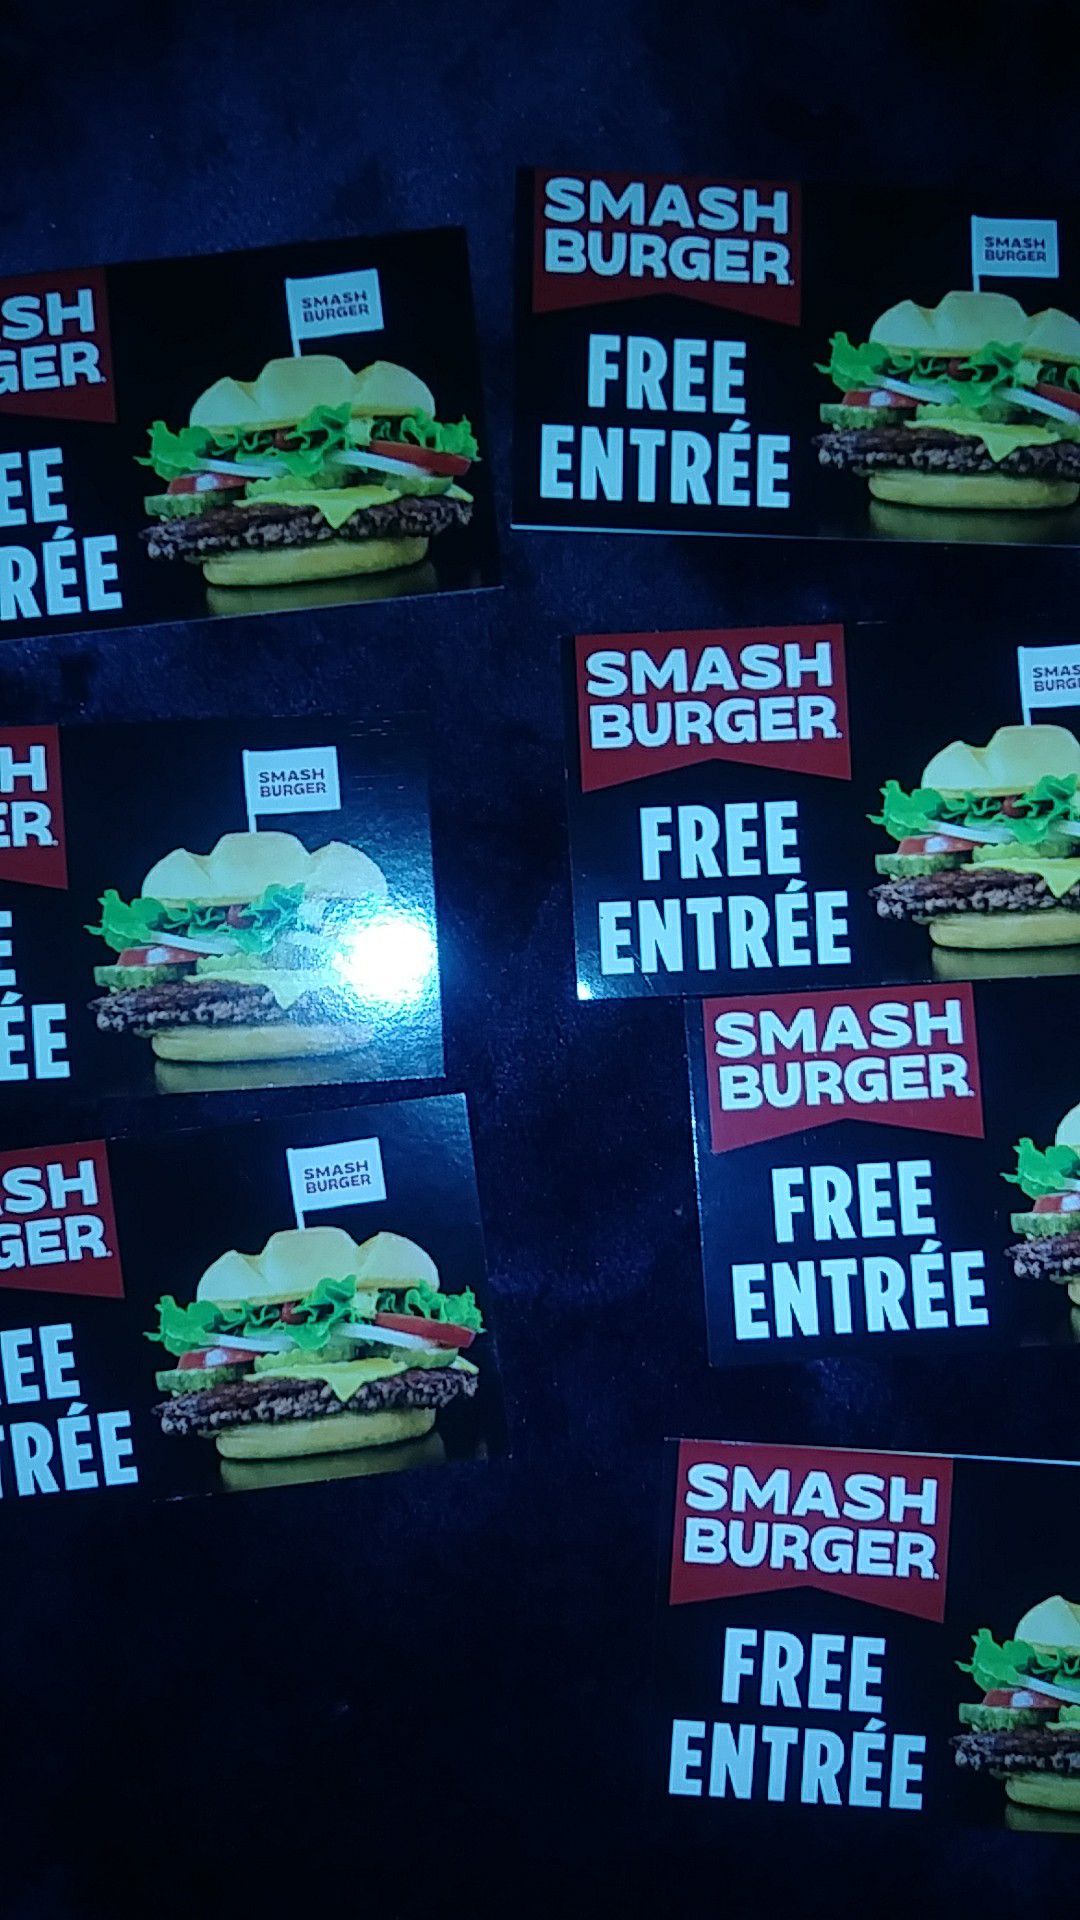 Smash burger coupons